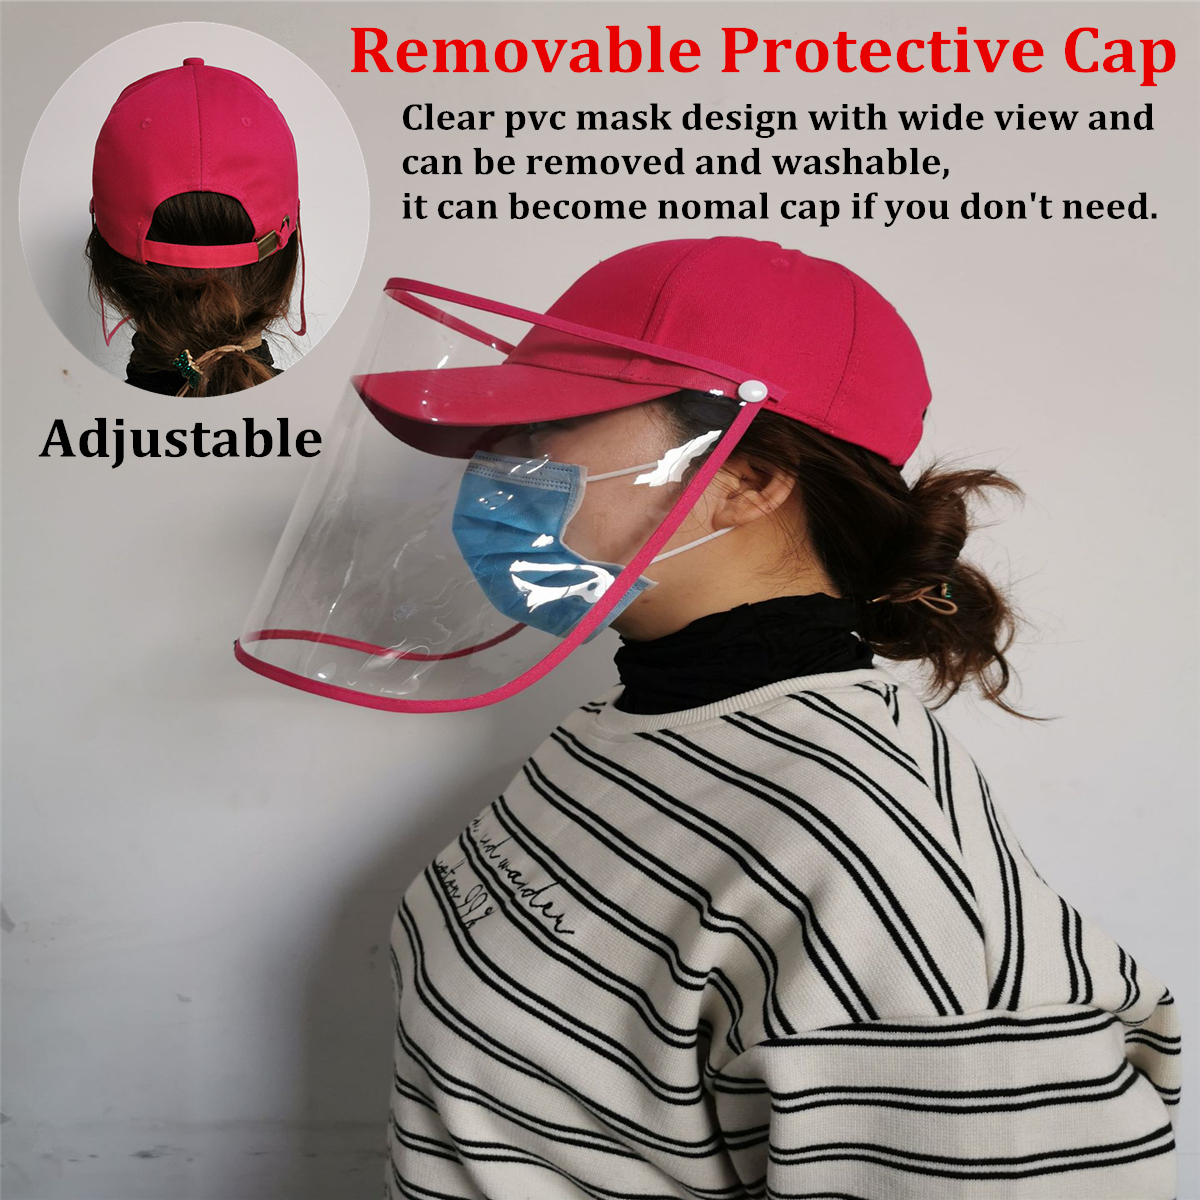 Removable-Protective-Cap-Full-Face-Mask-Splash-proof-Dustproof-Protector-Baseball-Hat-1654797-1